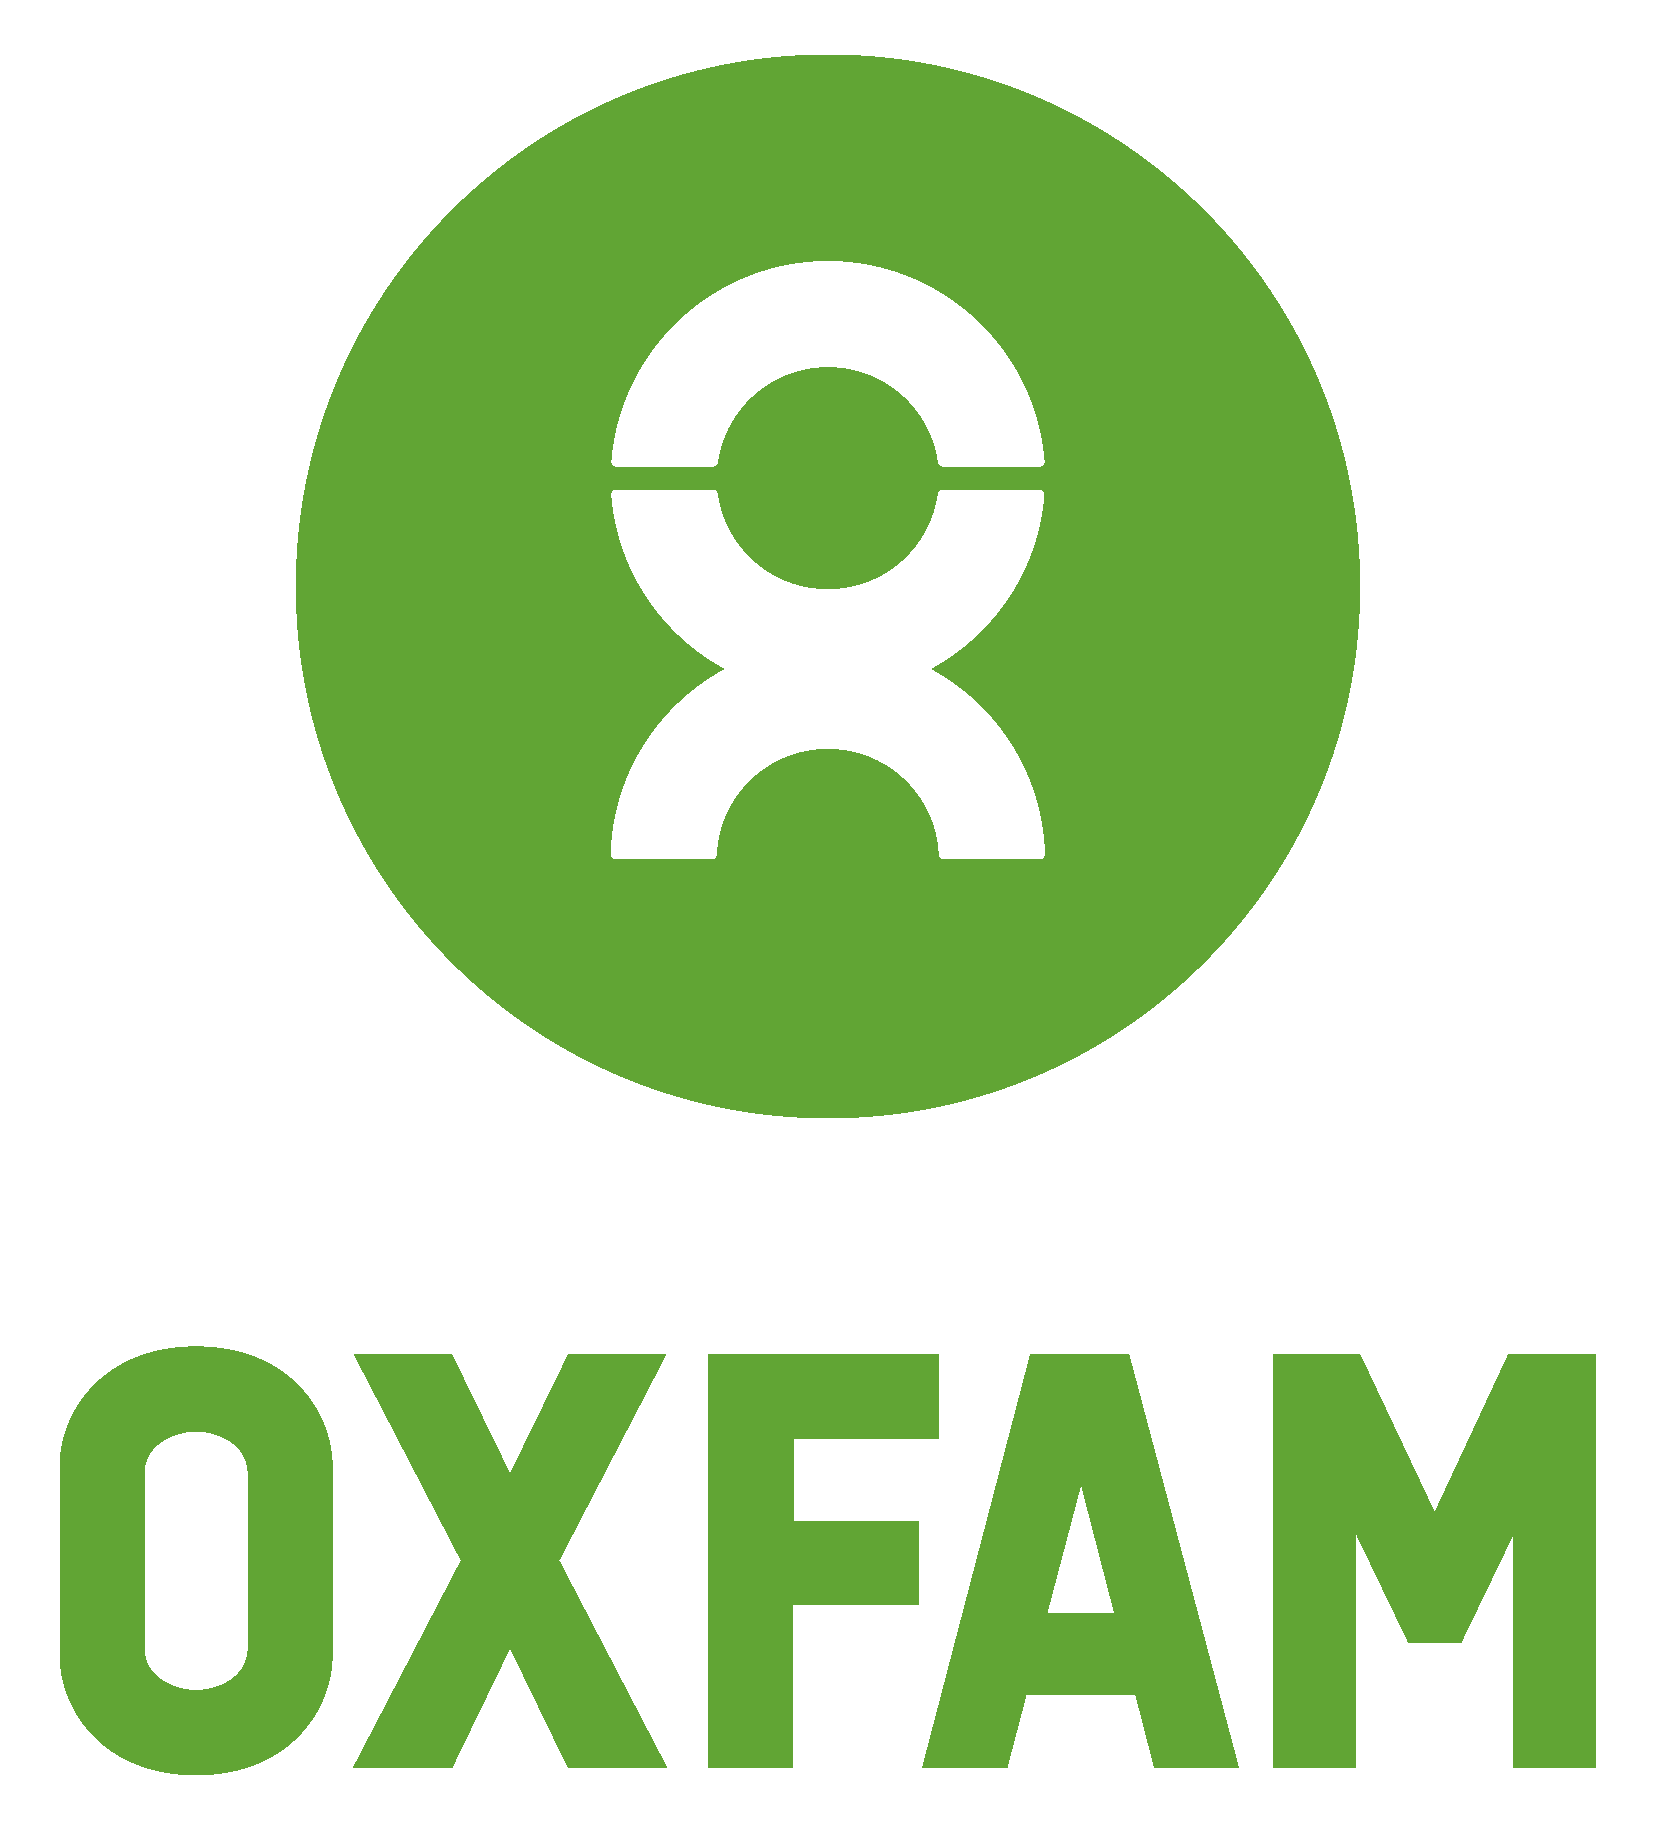 oxfam_logo_vertical_green_rgb.png